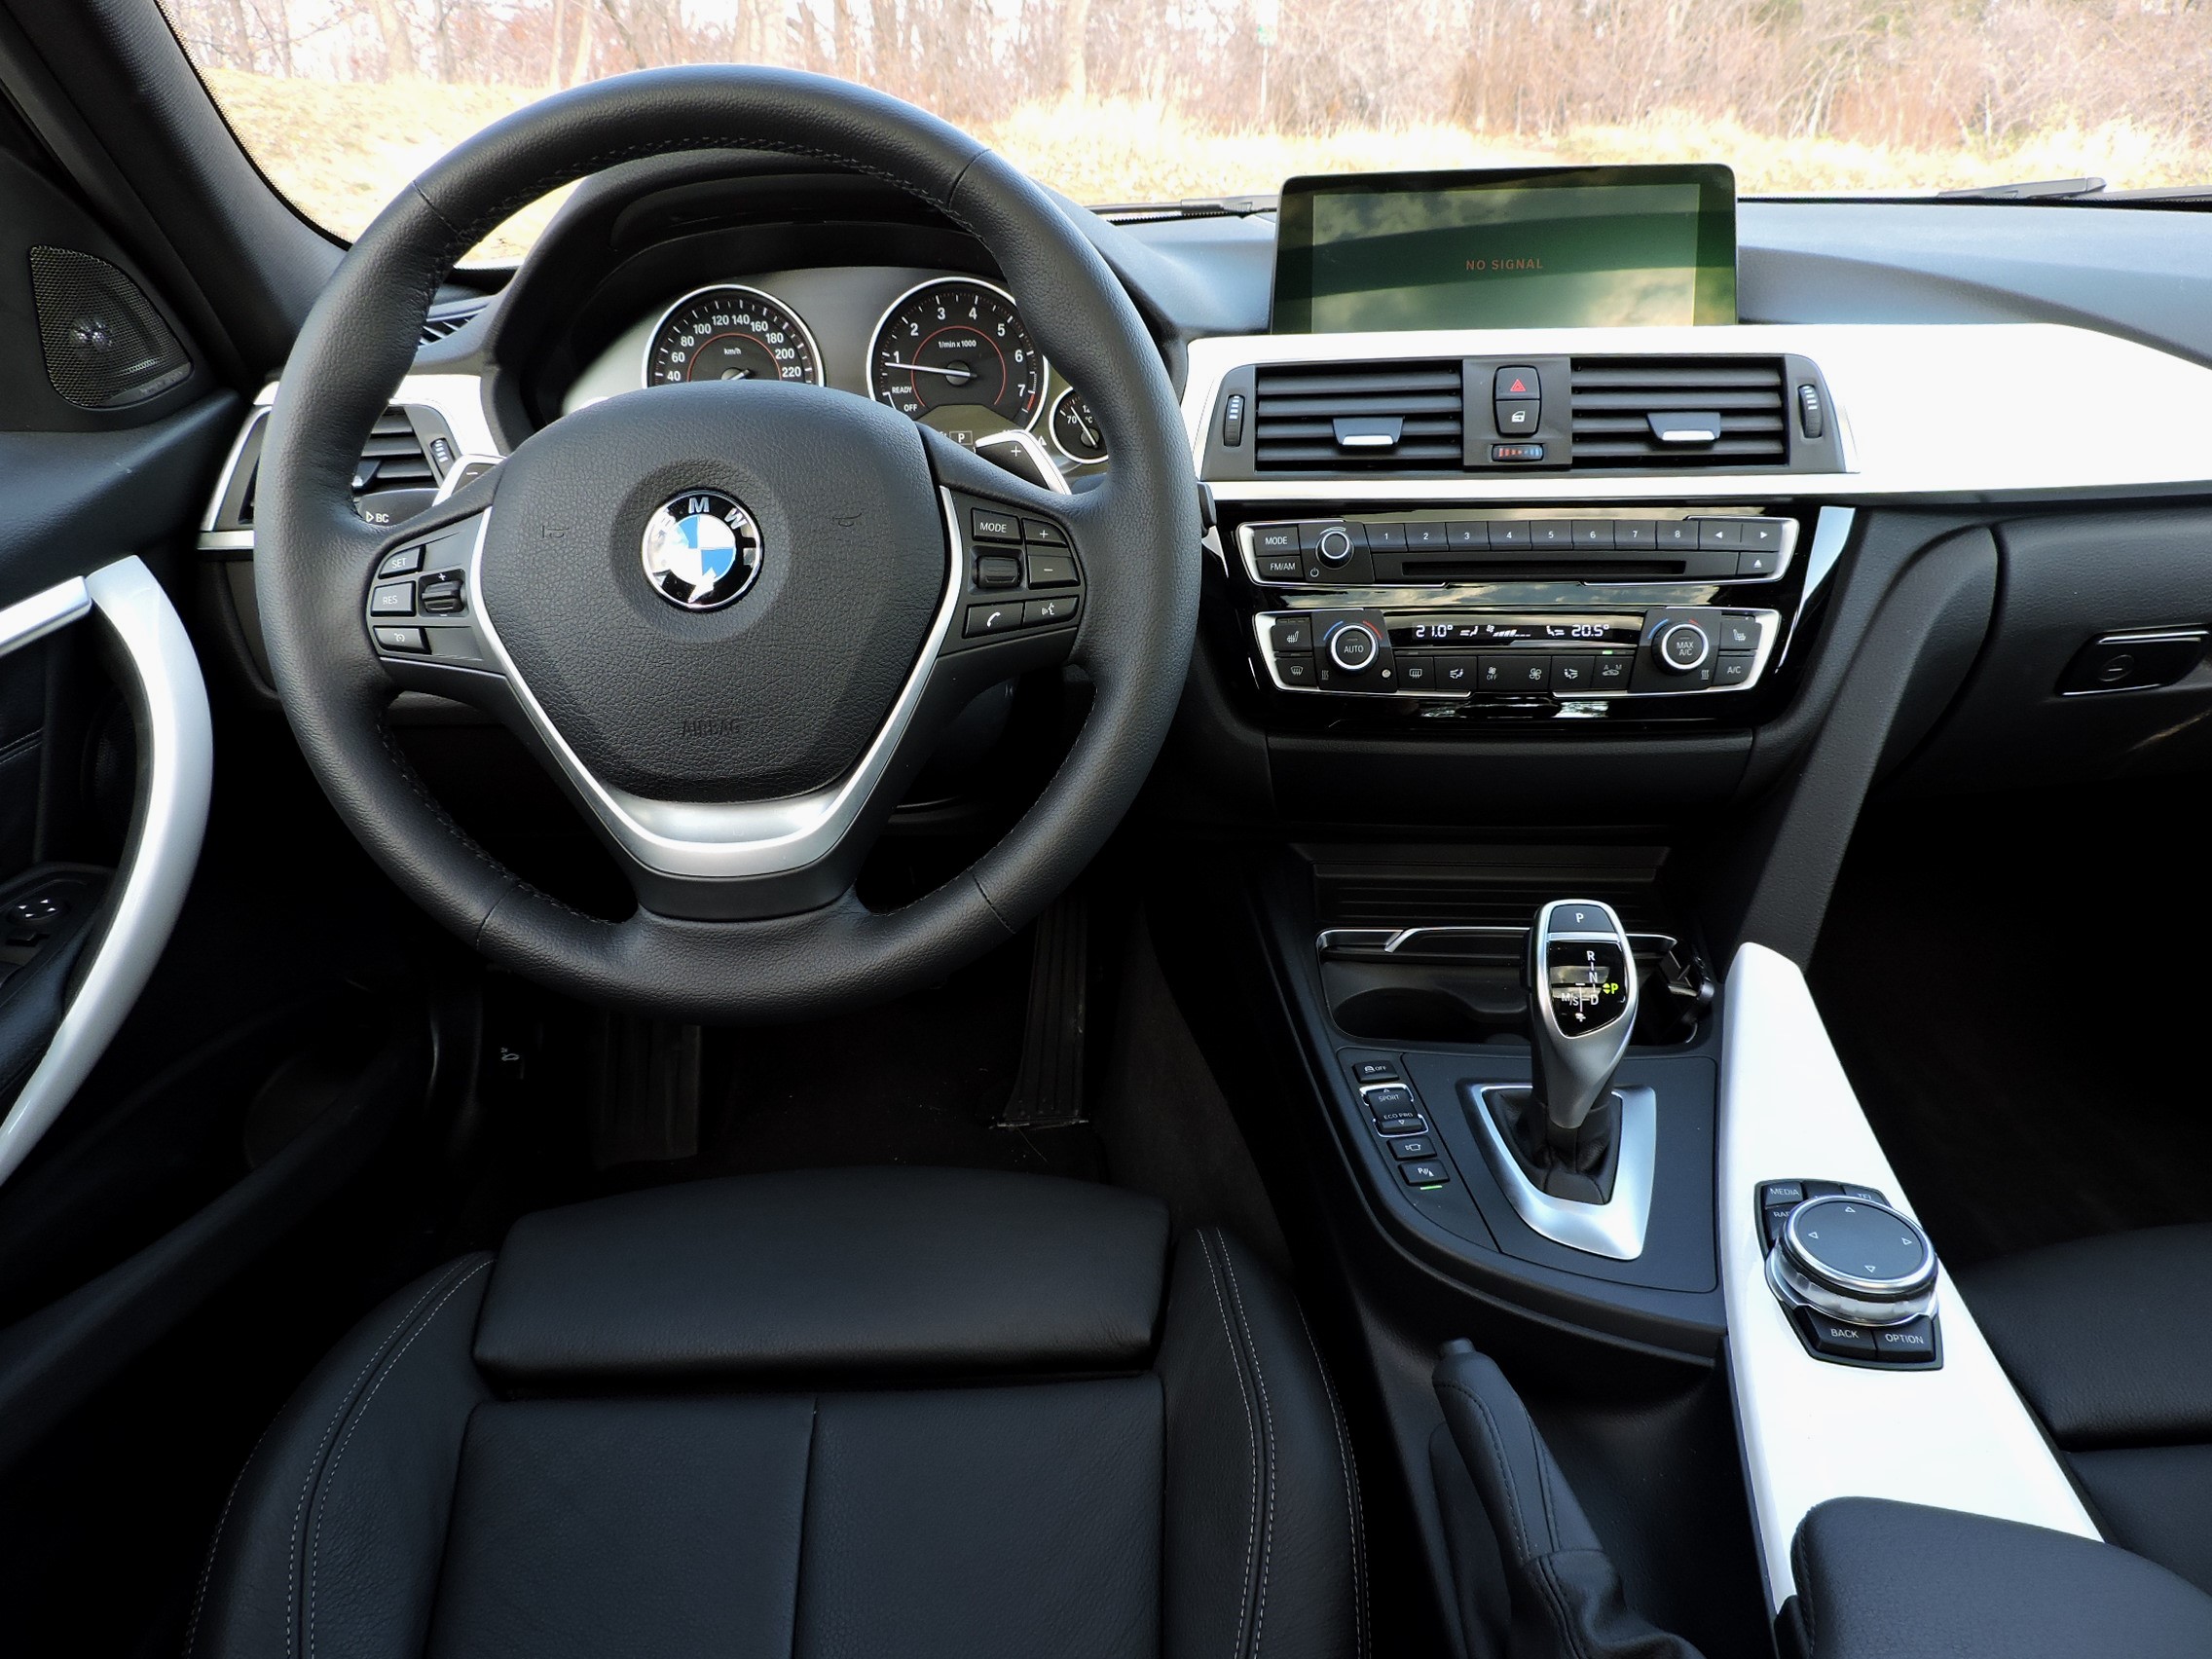 2016 BMW 328i xDrive Sports Wagon Review - AutoGuide.com